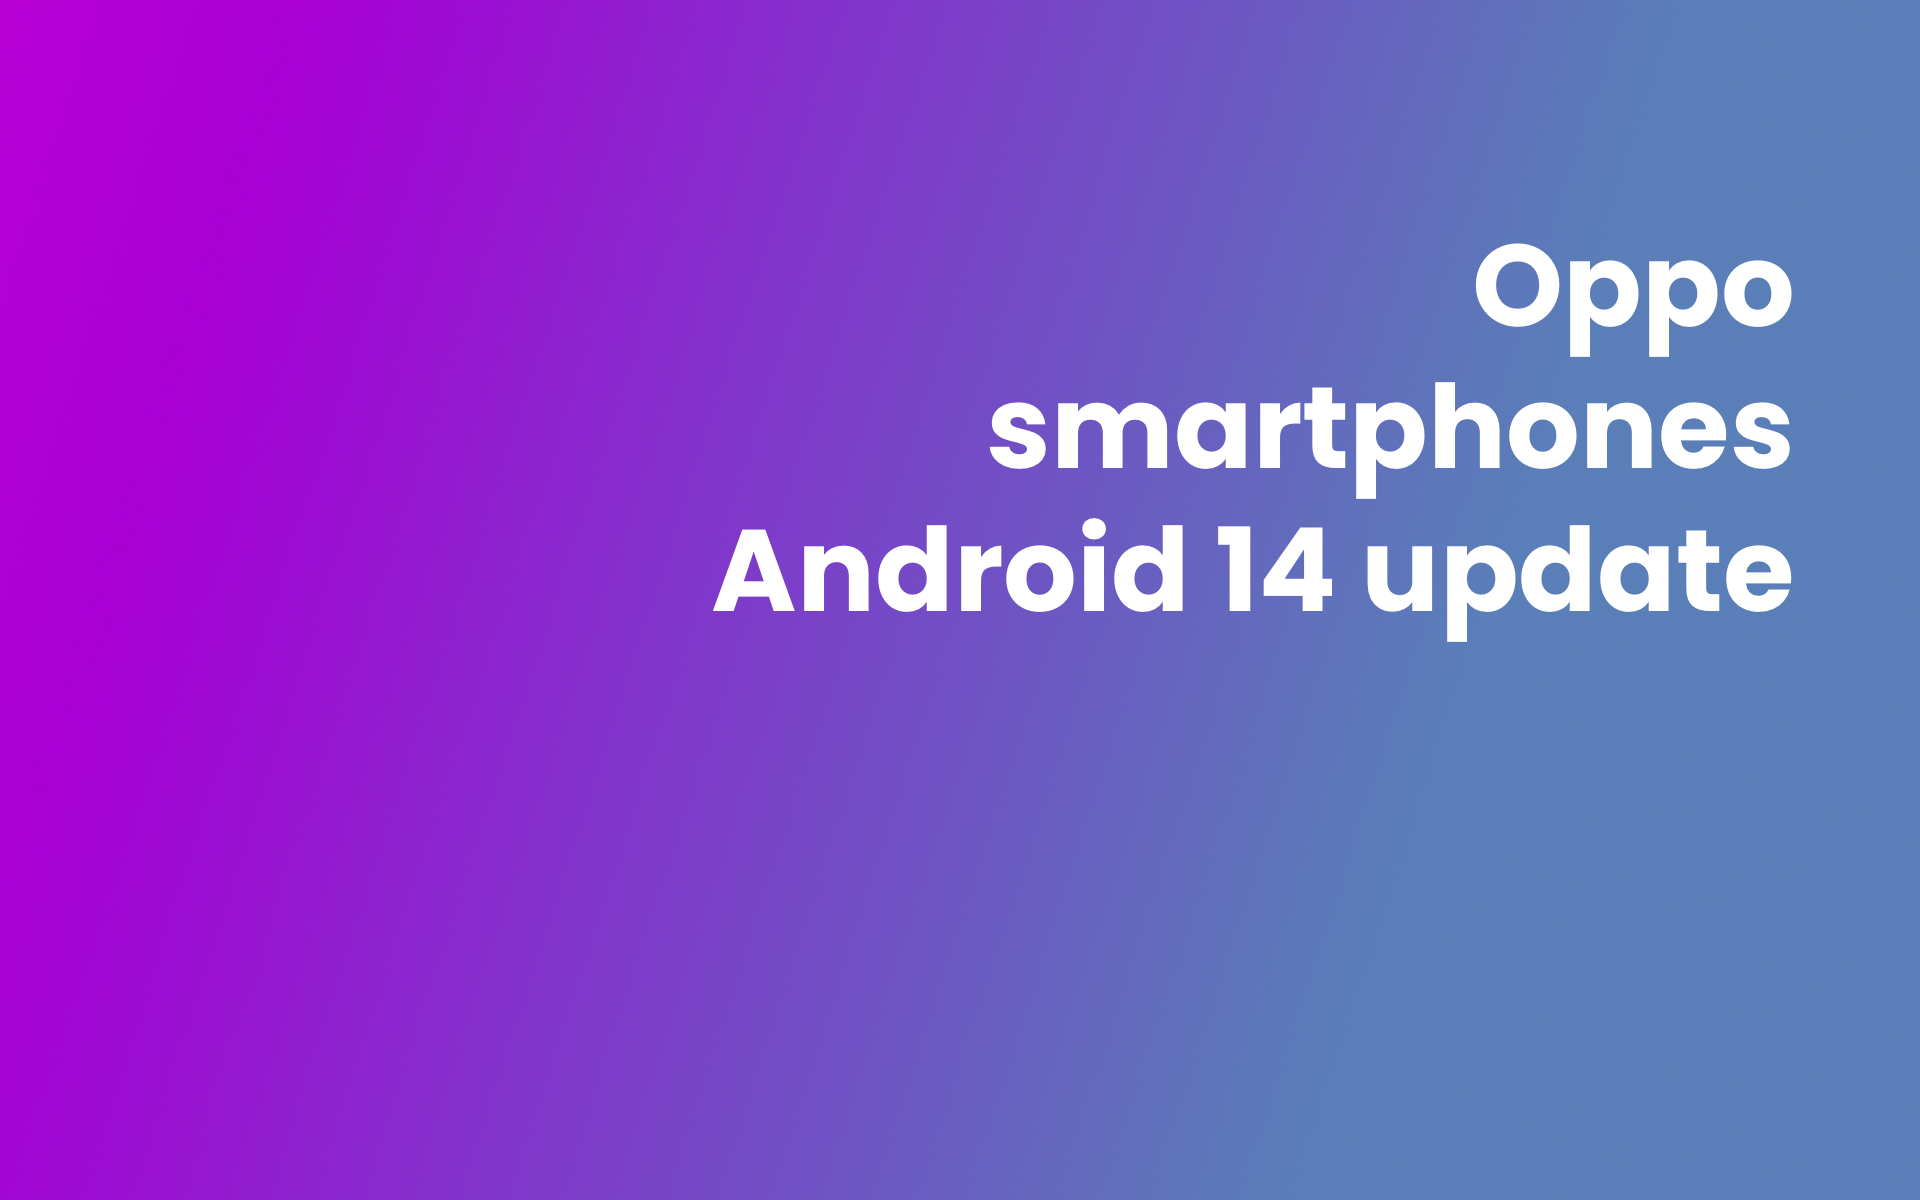 Oppo smartphones Android 14 update